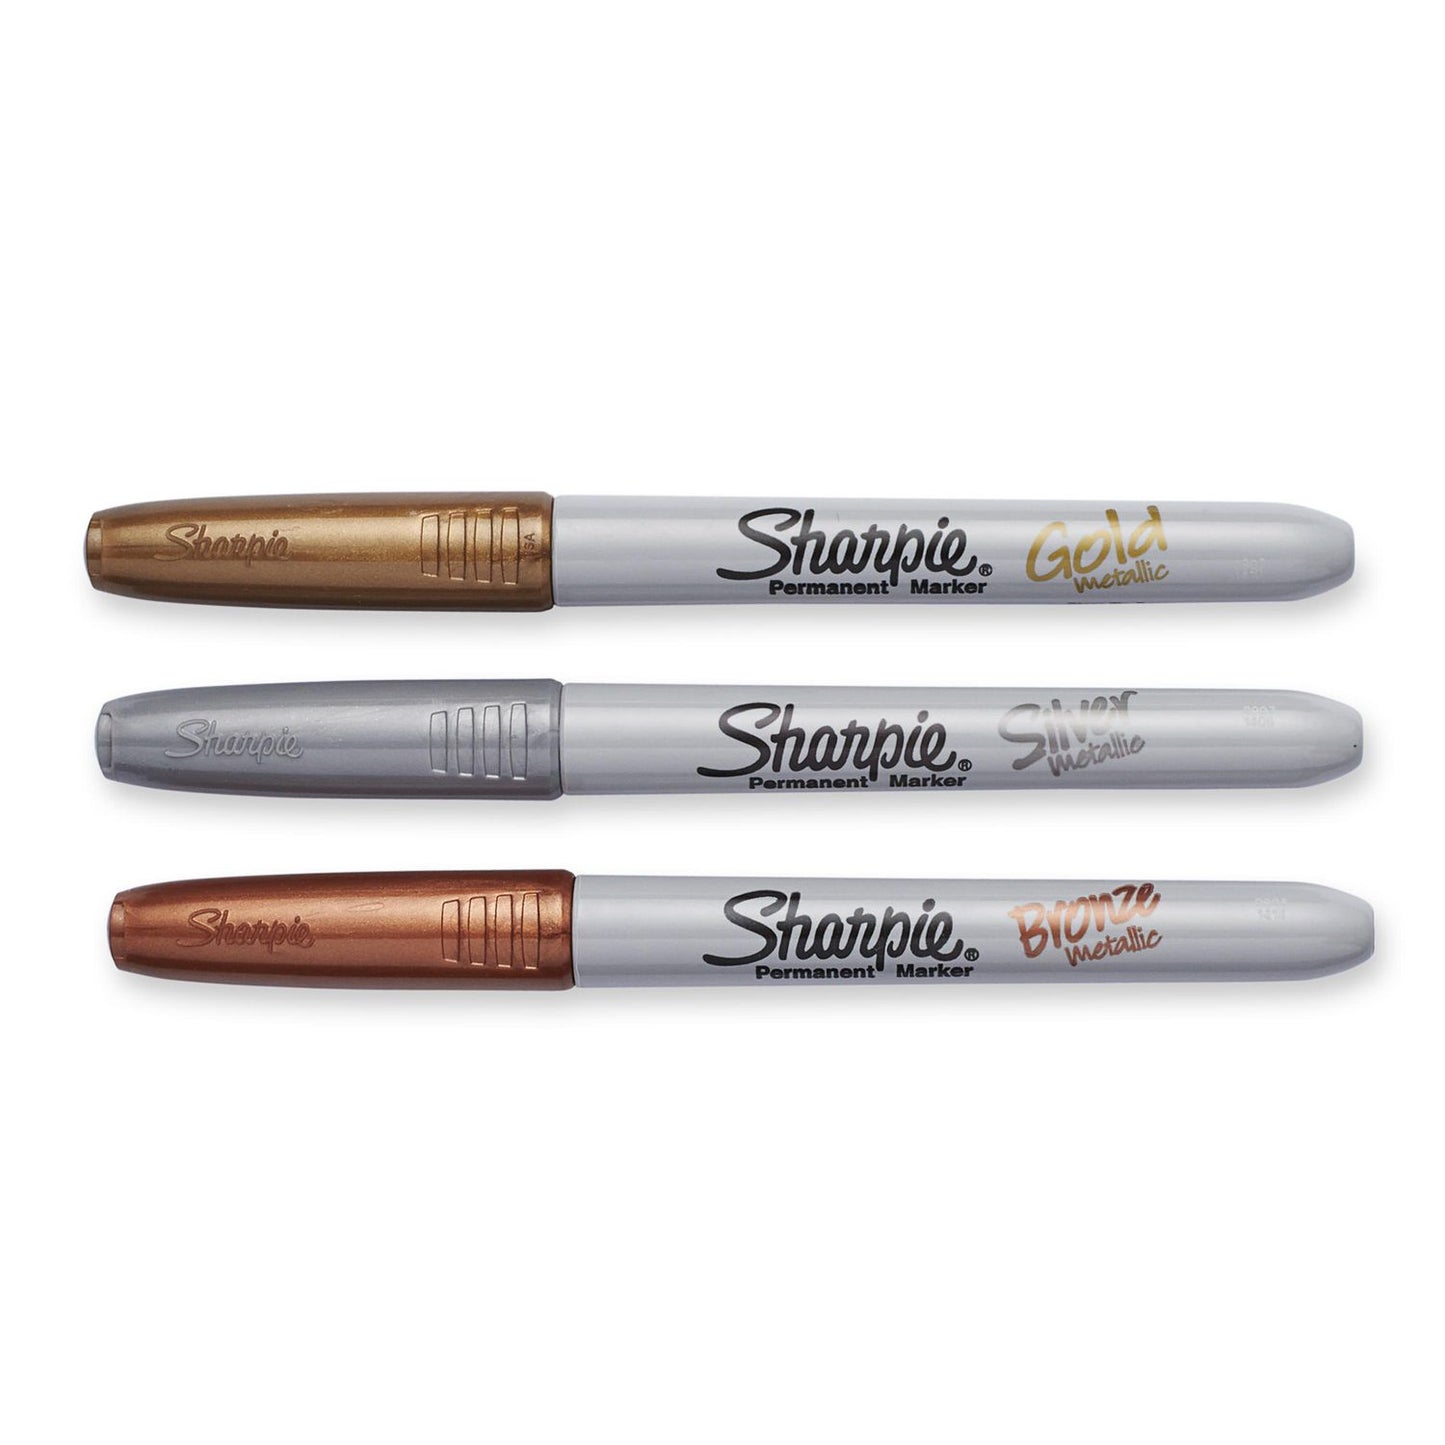 Sharpie Metallic Fine Point Permanent Markers 3 Pack Gold, Silver & Bronze || مجموعه اقلام شاربي 3 لون ذهبي فضي نحاسي